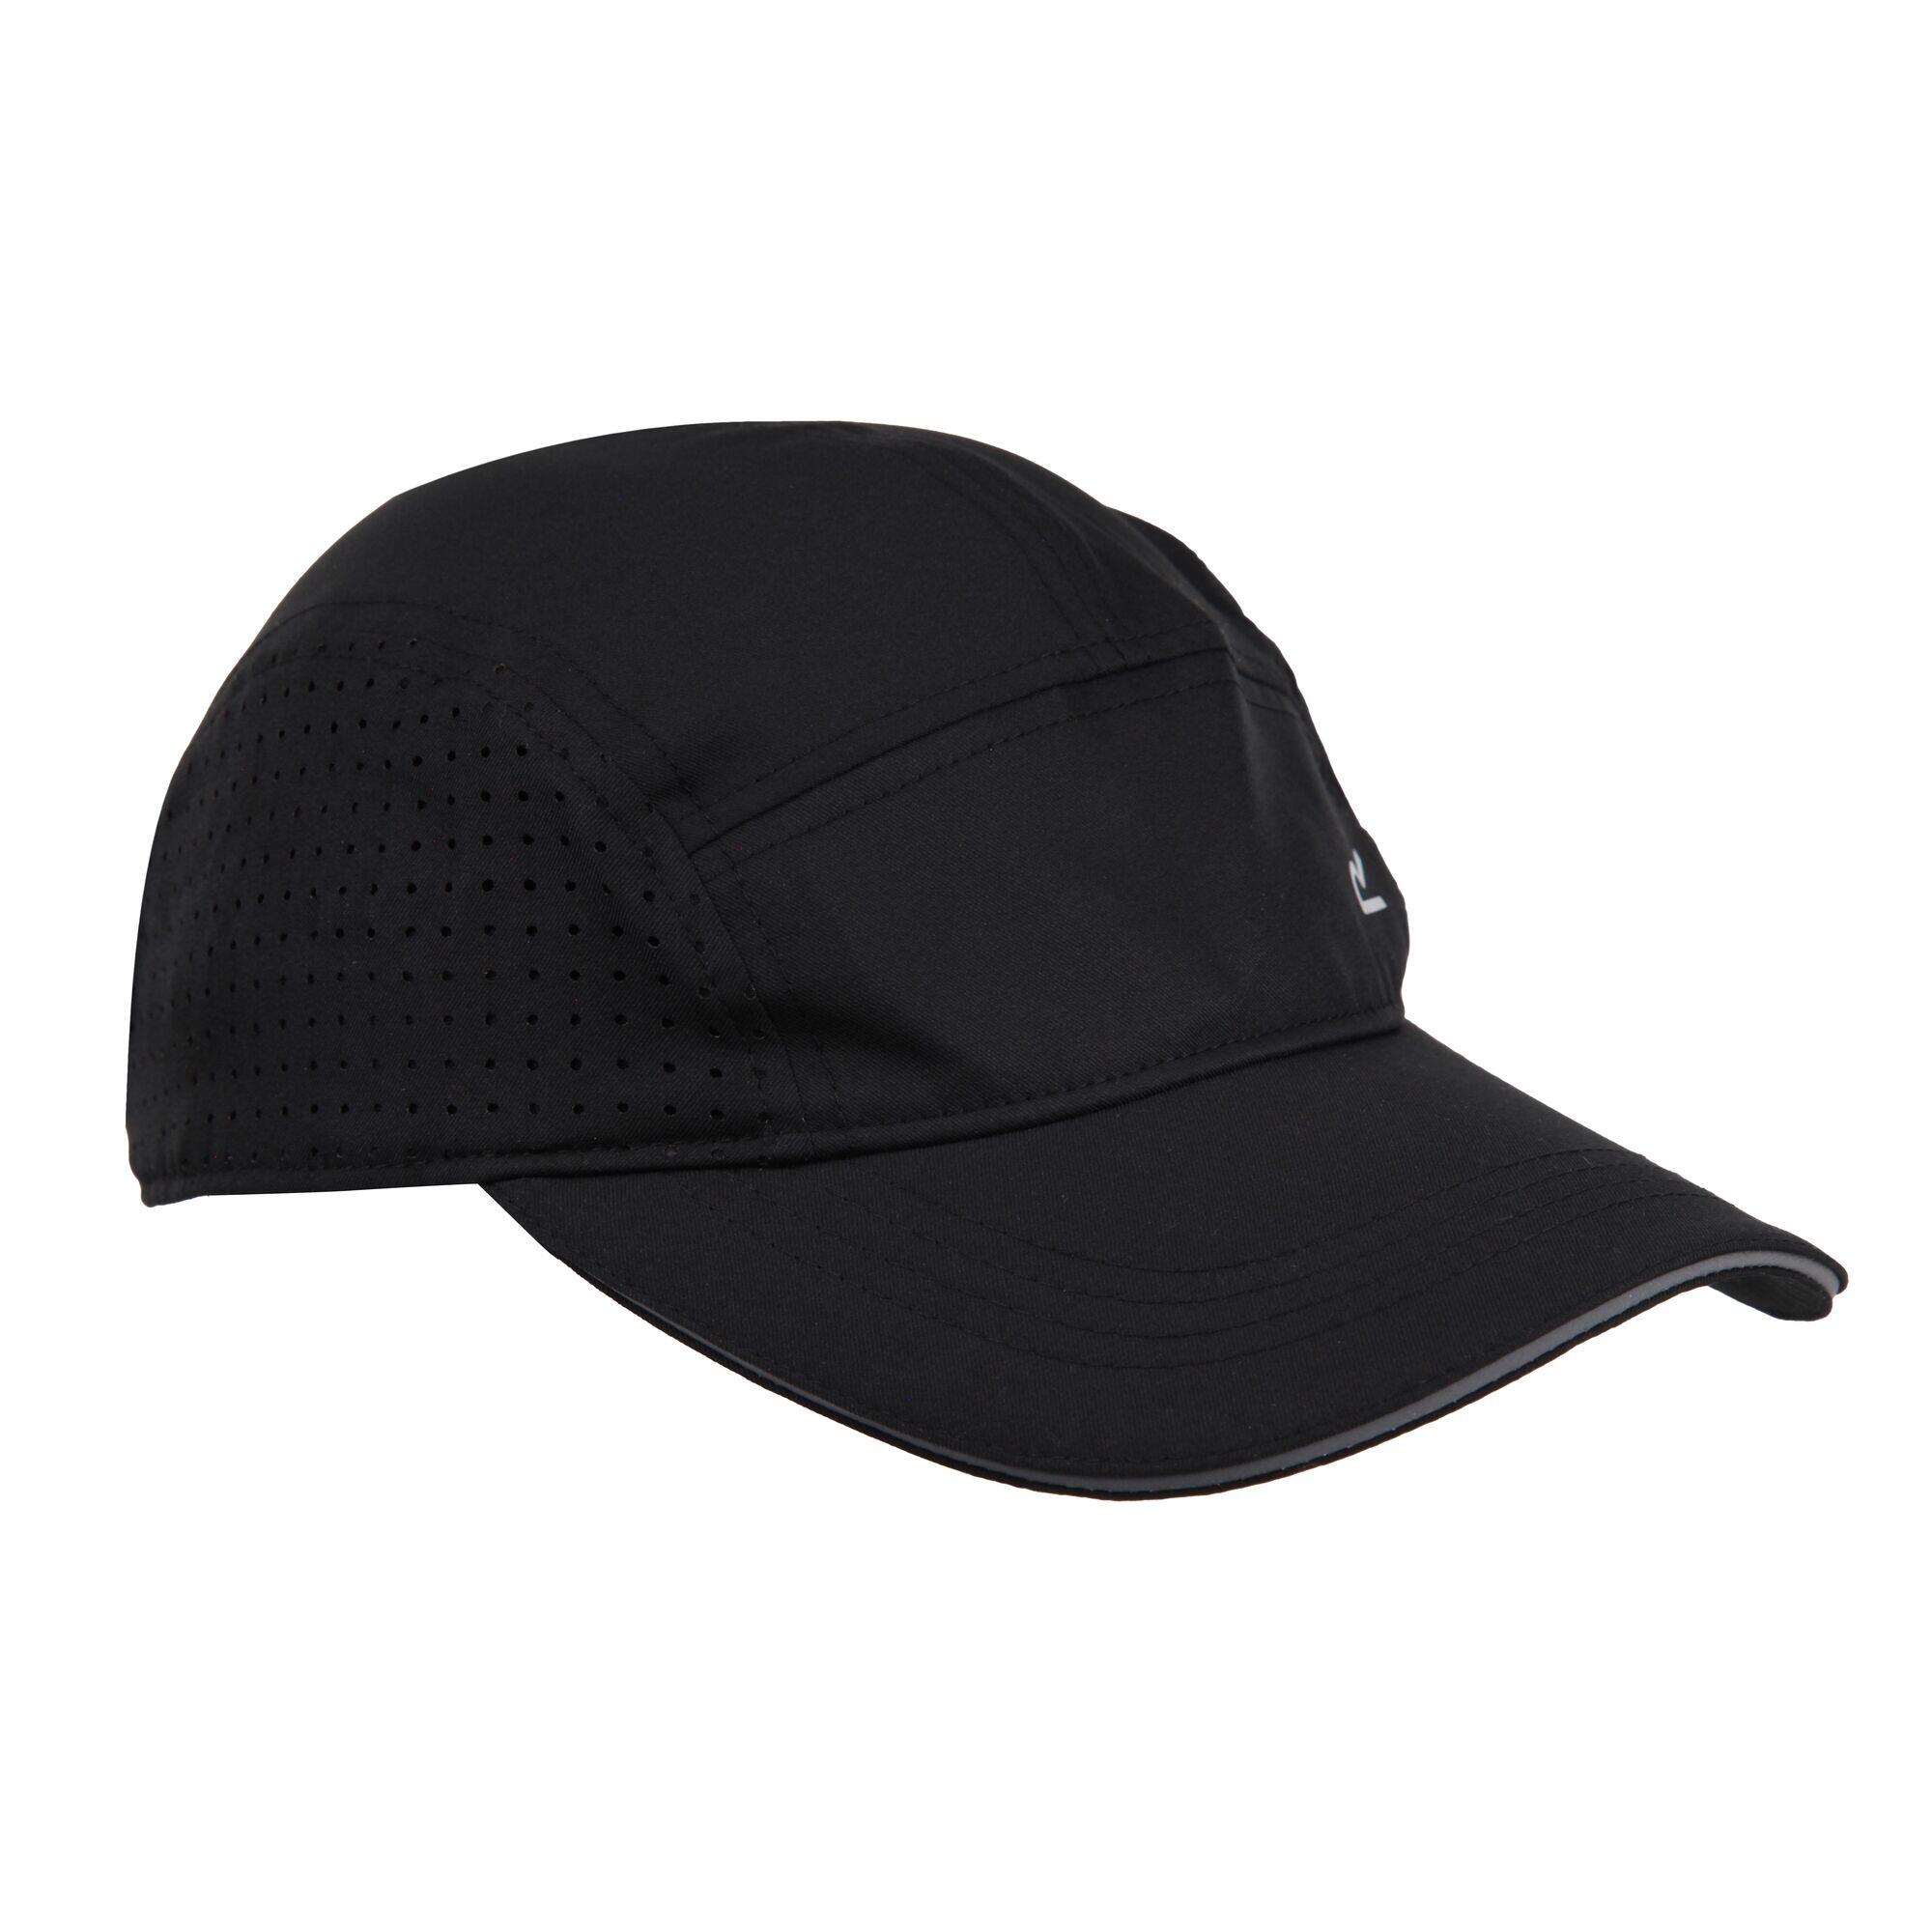 Unisex Adult Active Cap (Black) 4/5